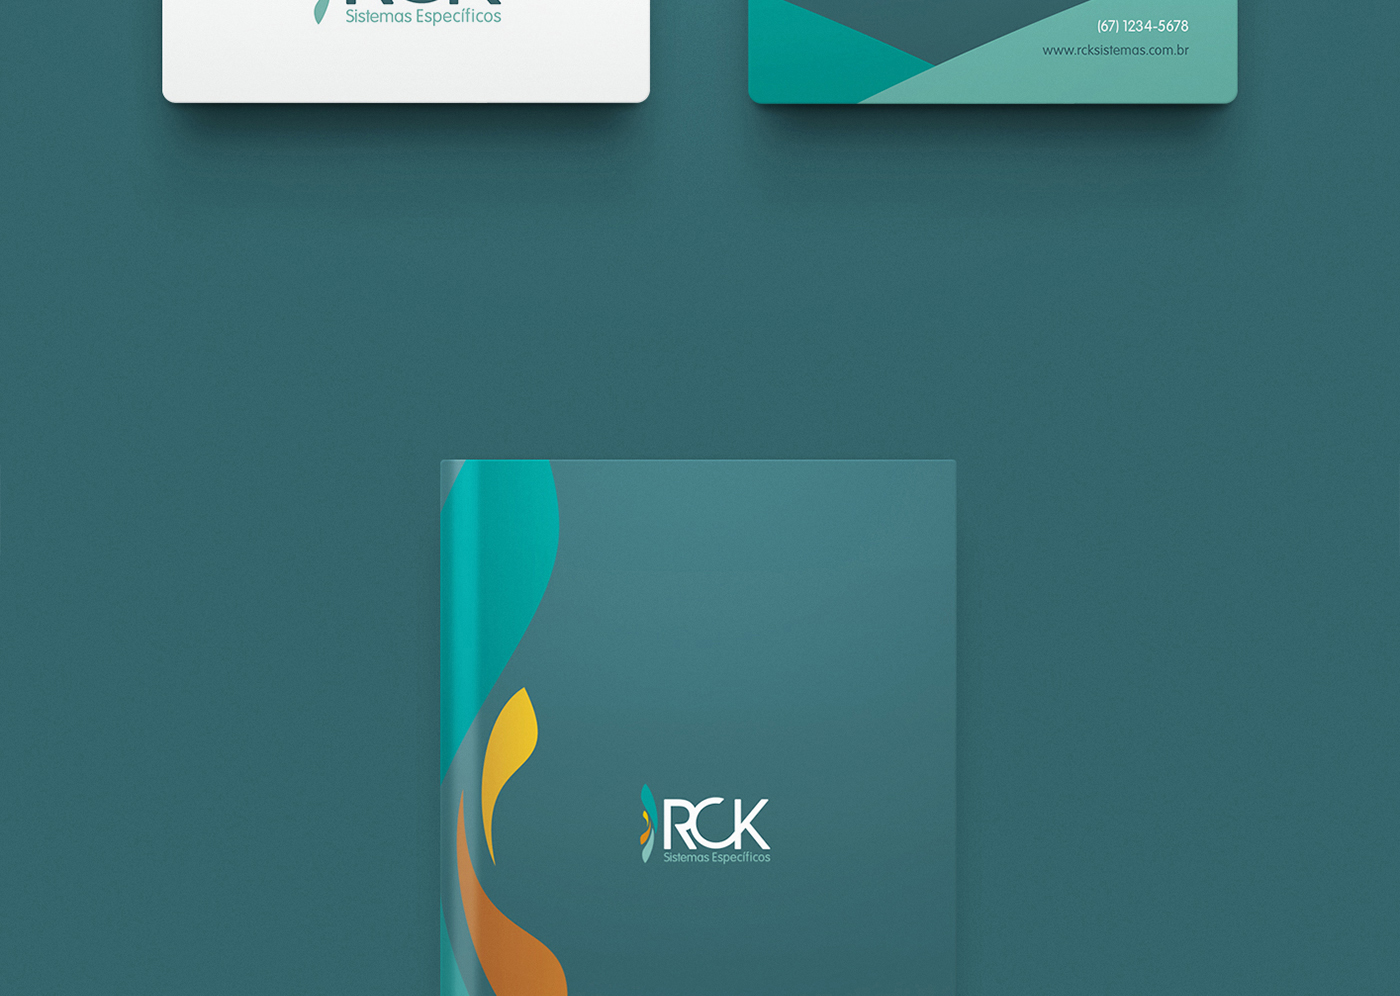 marca Corporate Identity RCK sistemas systems visual identity brand design gráfico identidade visual mark logo Mascot mascote Whale